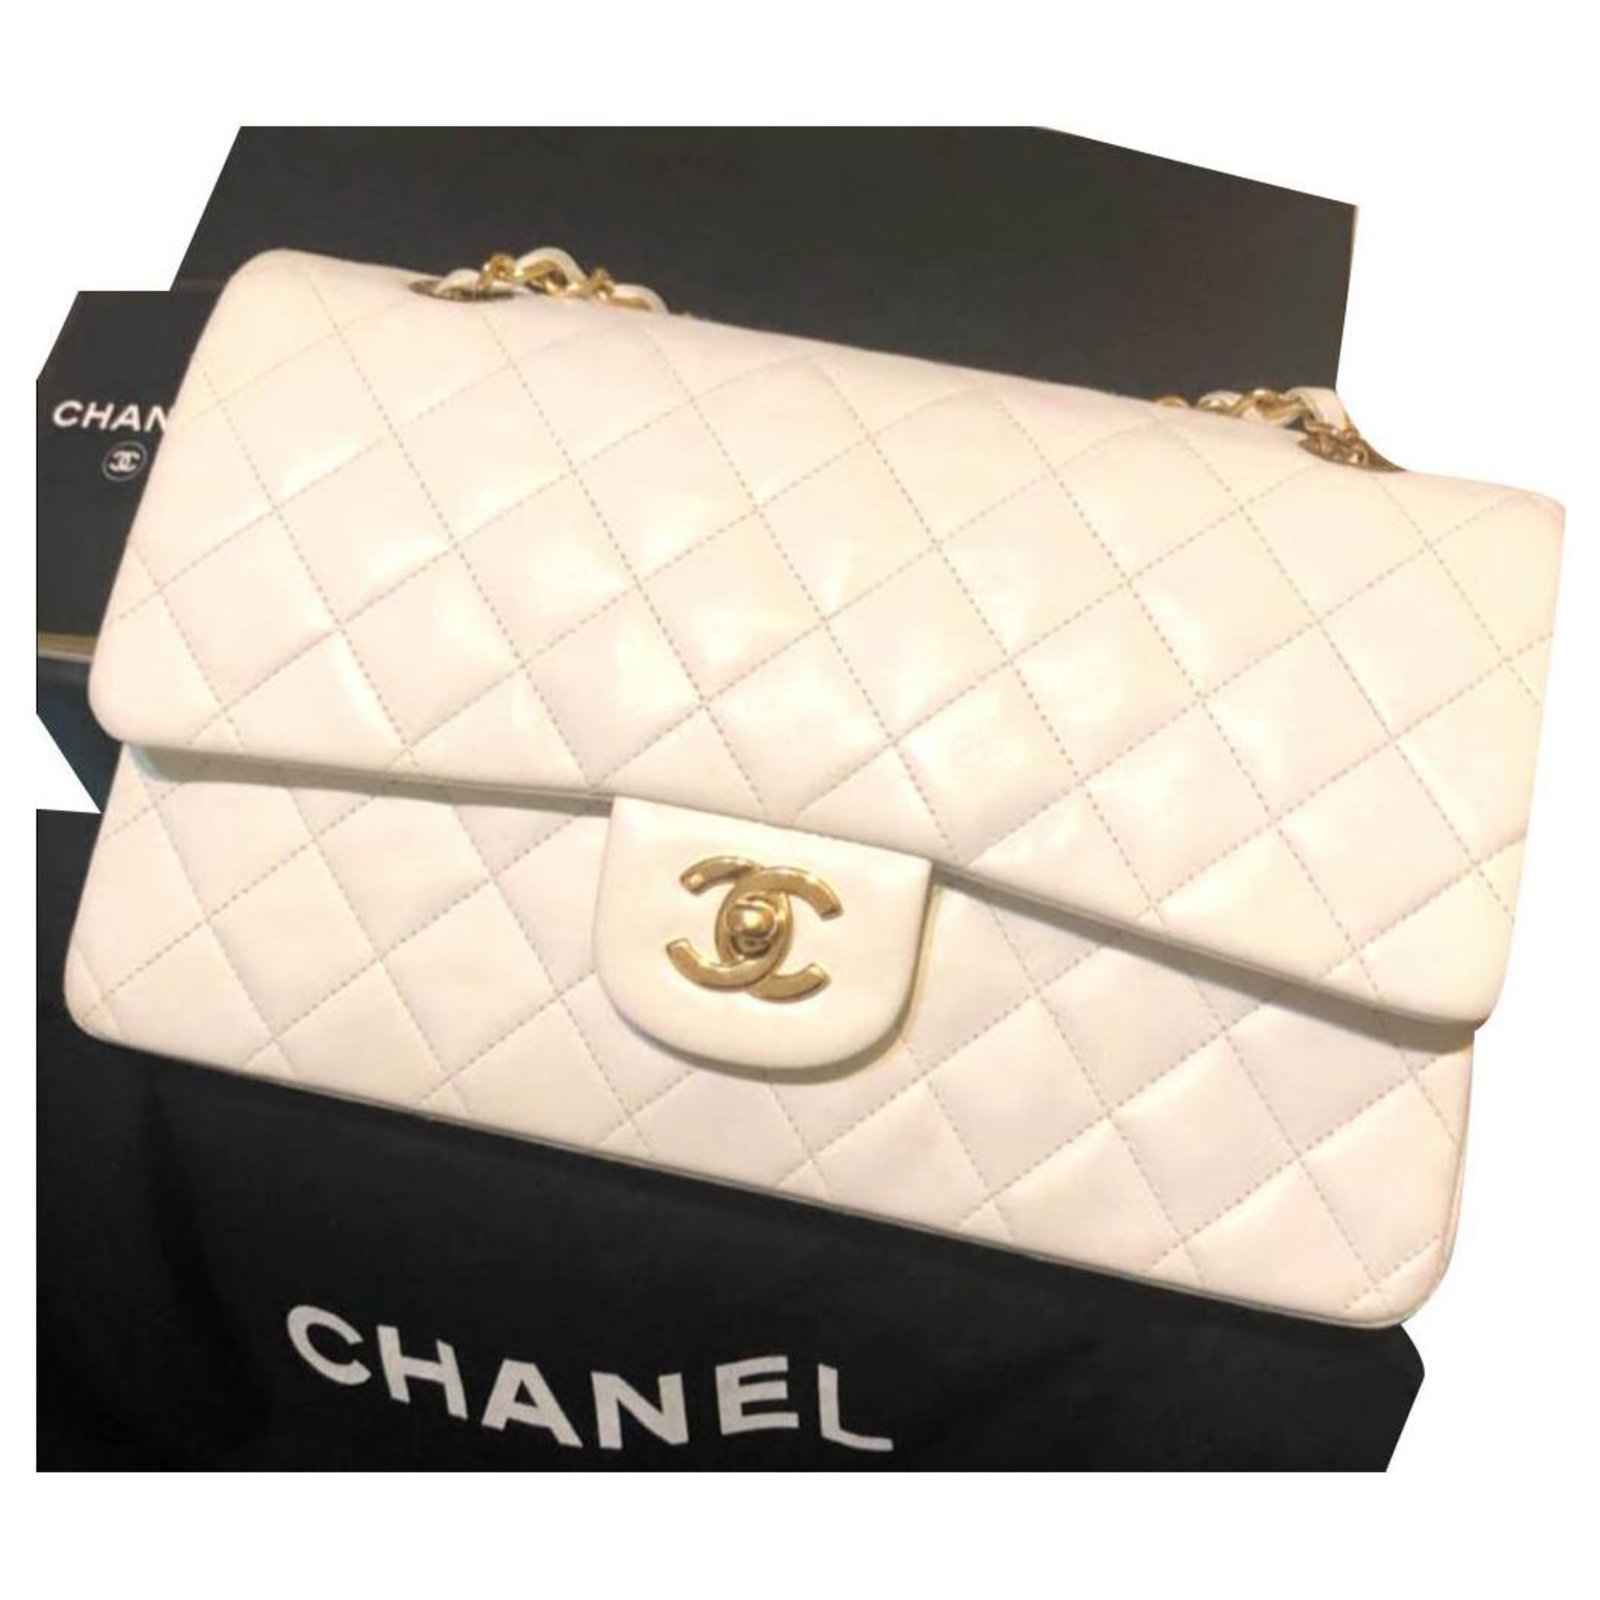 Vintage Chanel white medium classic flap bag